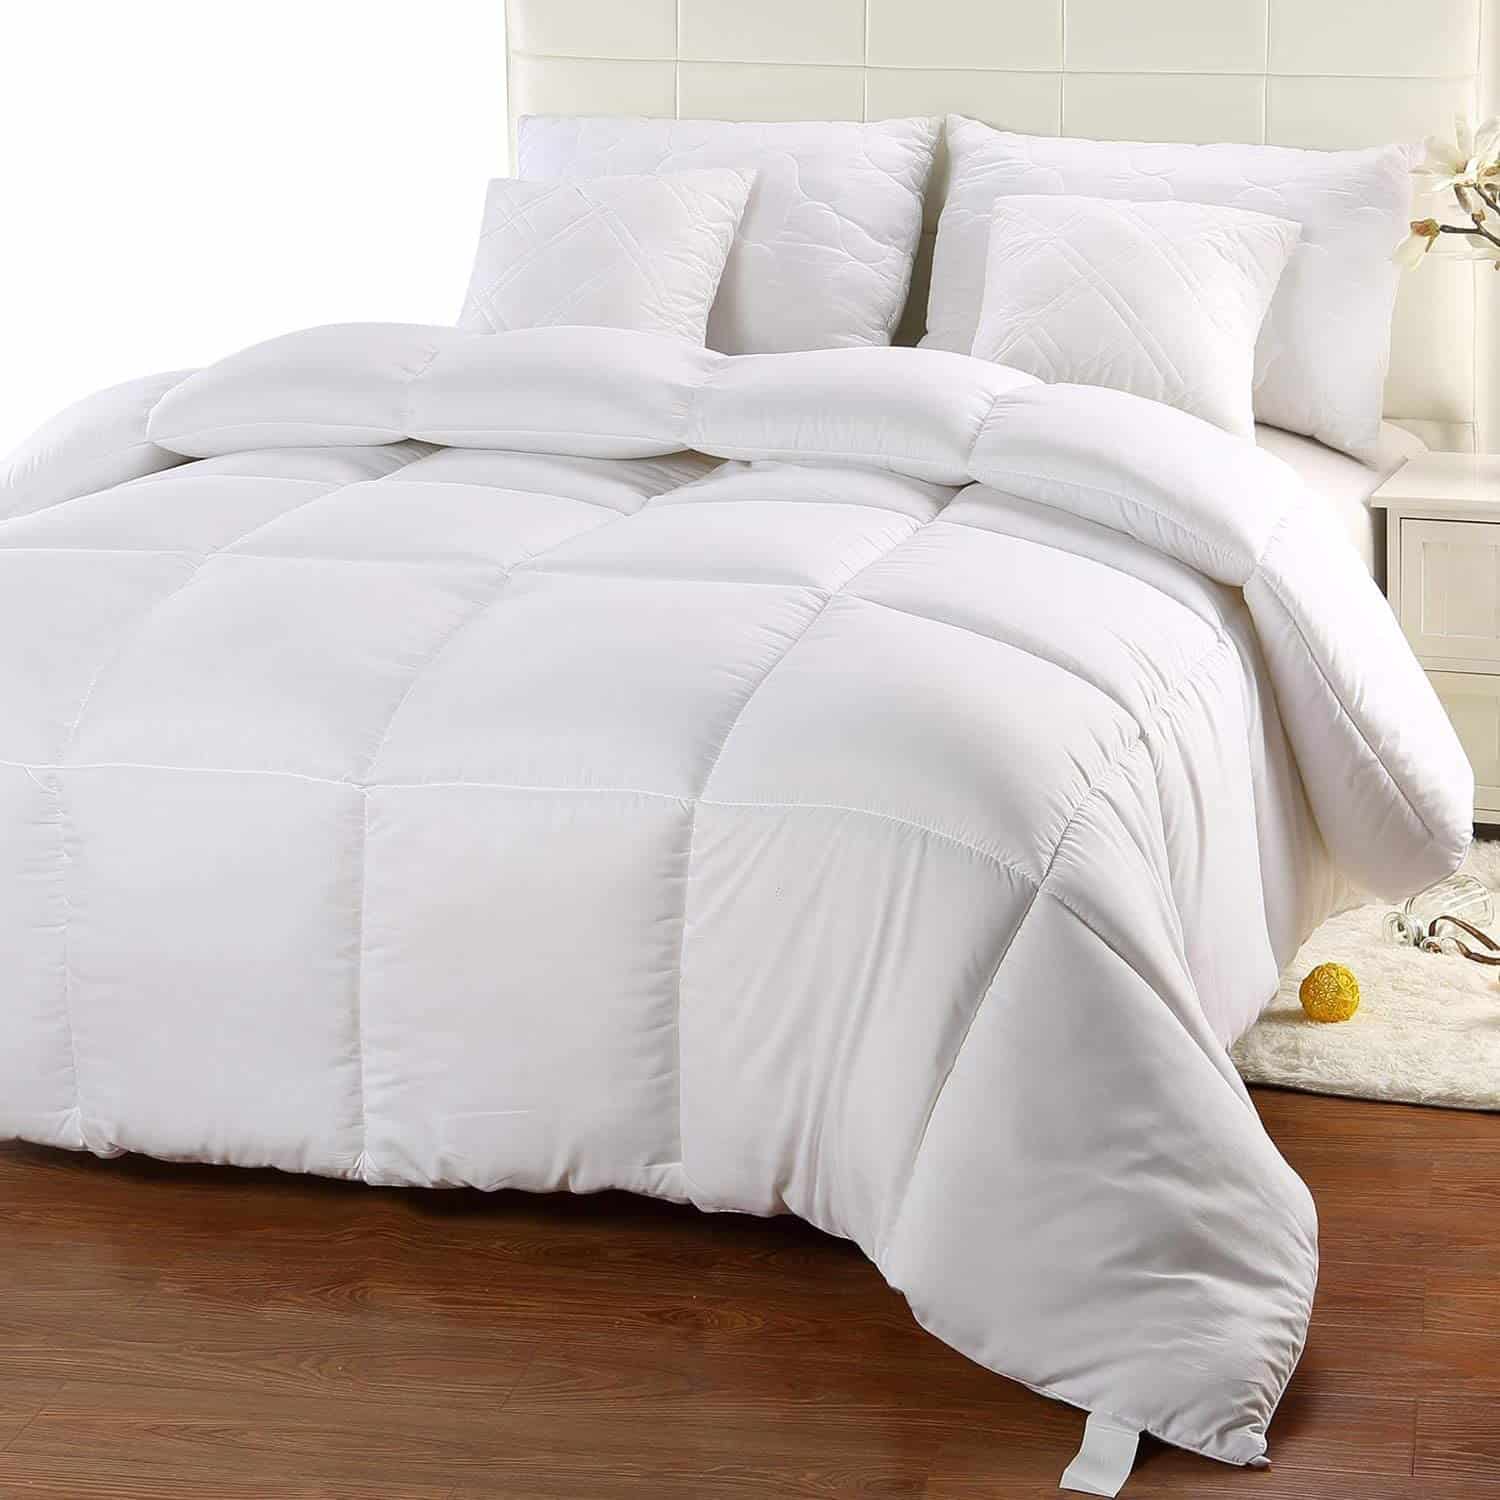 All-Season Down Alternative Quilted Comforter - Plush Microfiber Fill - Machine Washable